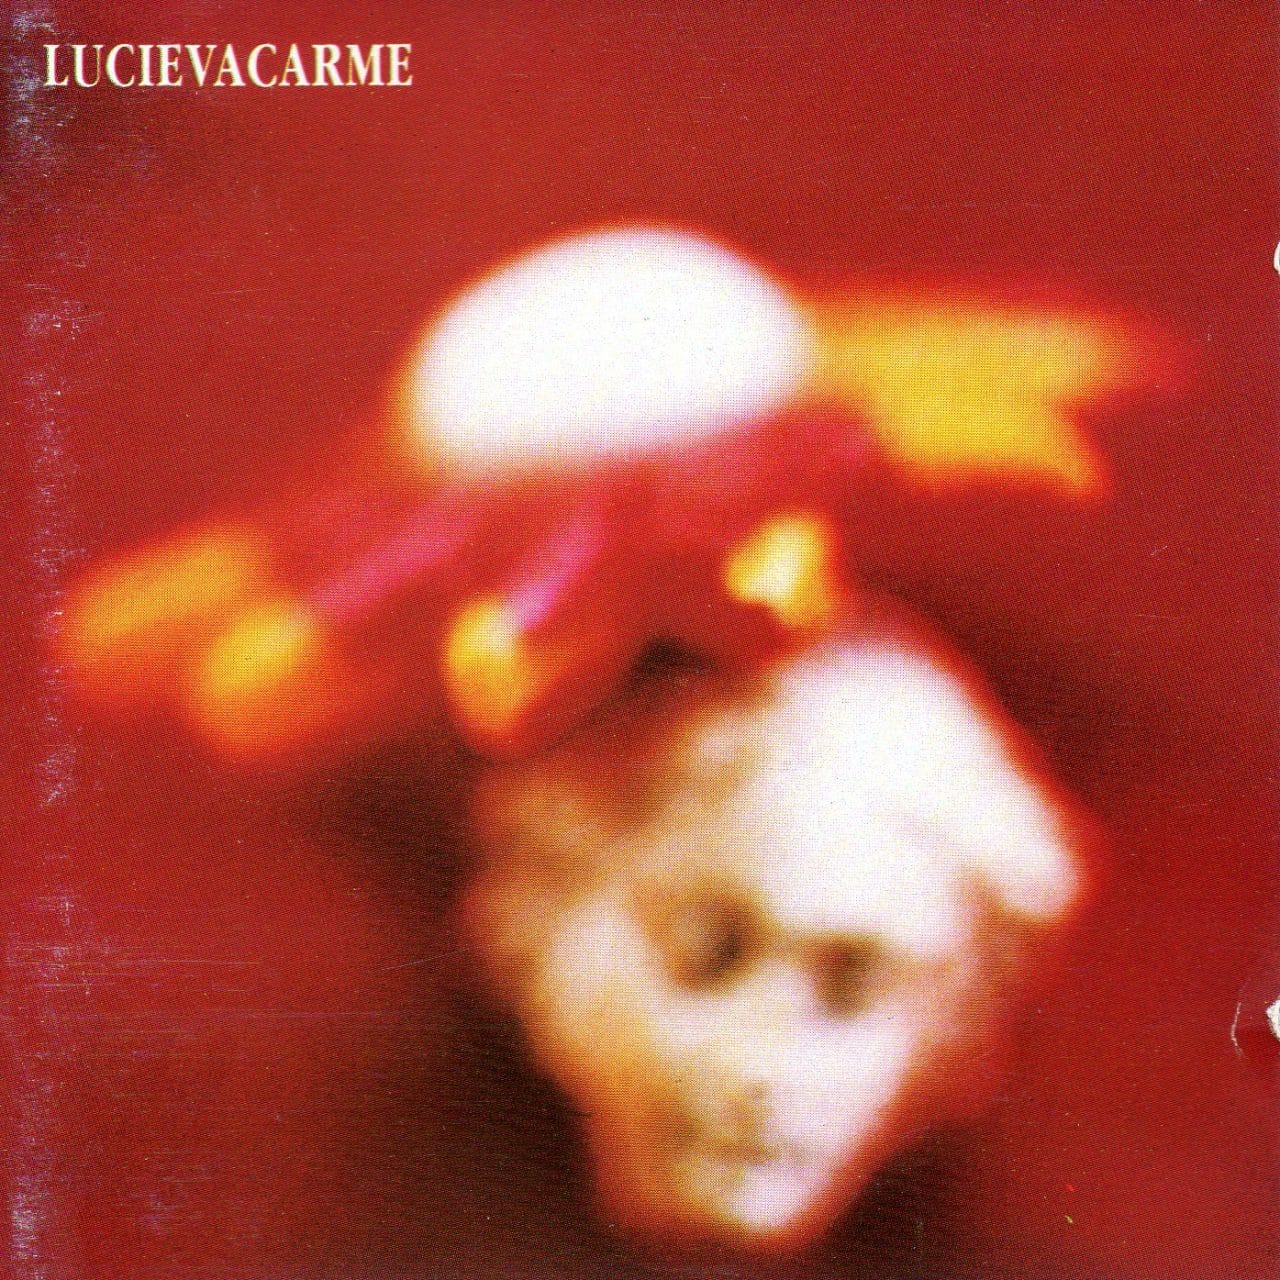 Lucie vacarme – Milkyway (1992)